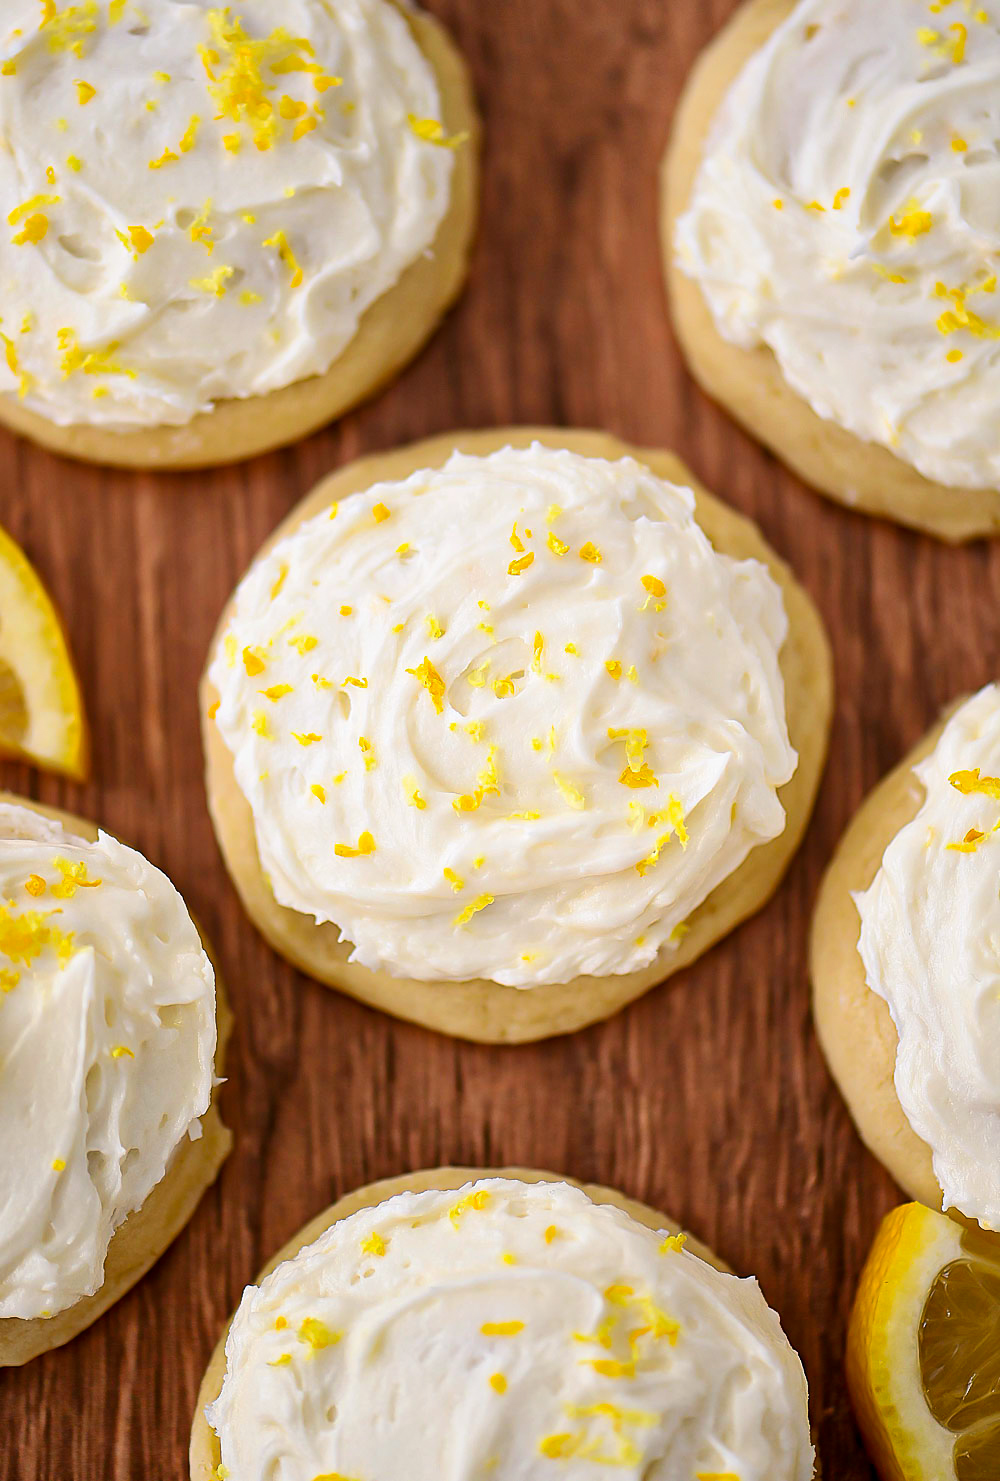 Lemon flavored sugar cookies with lemon buttercream frosting on top.